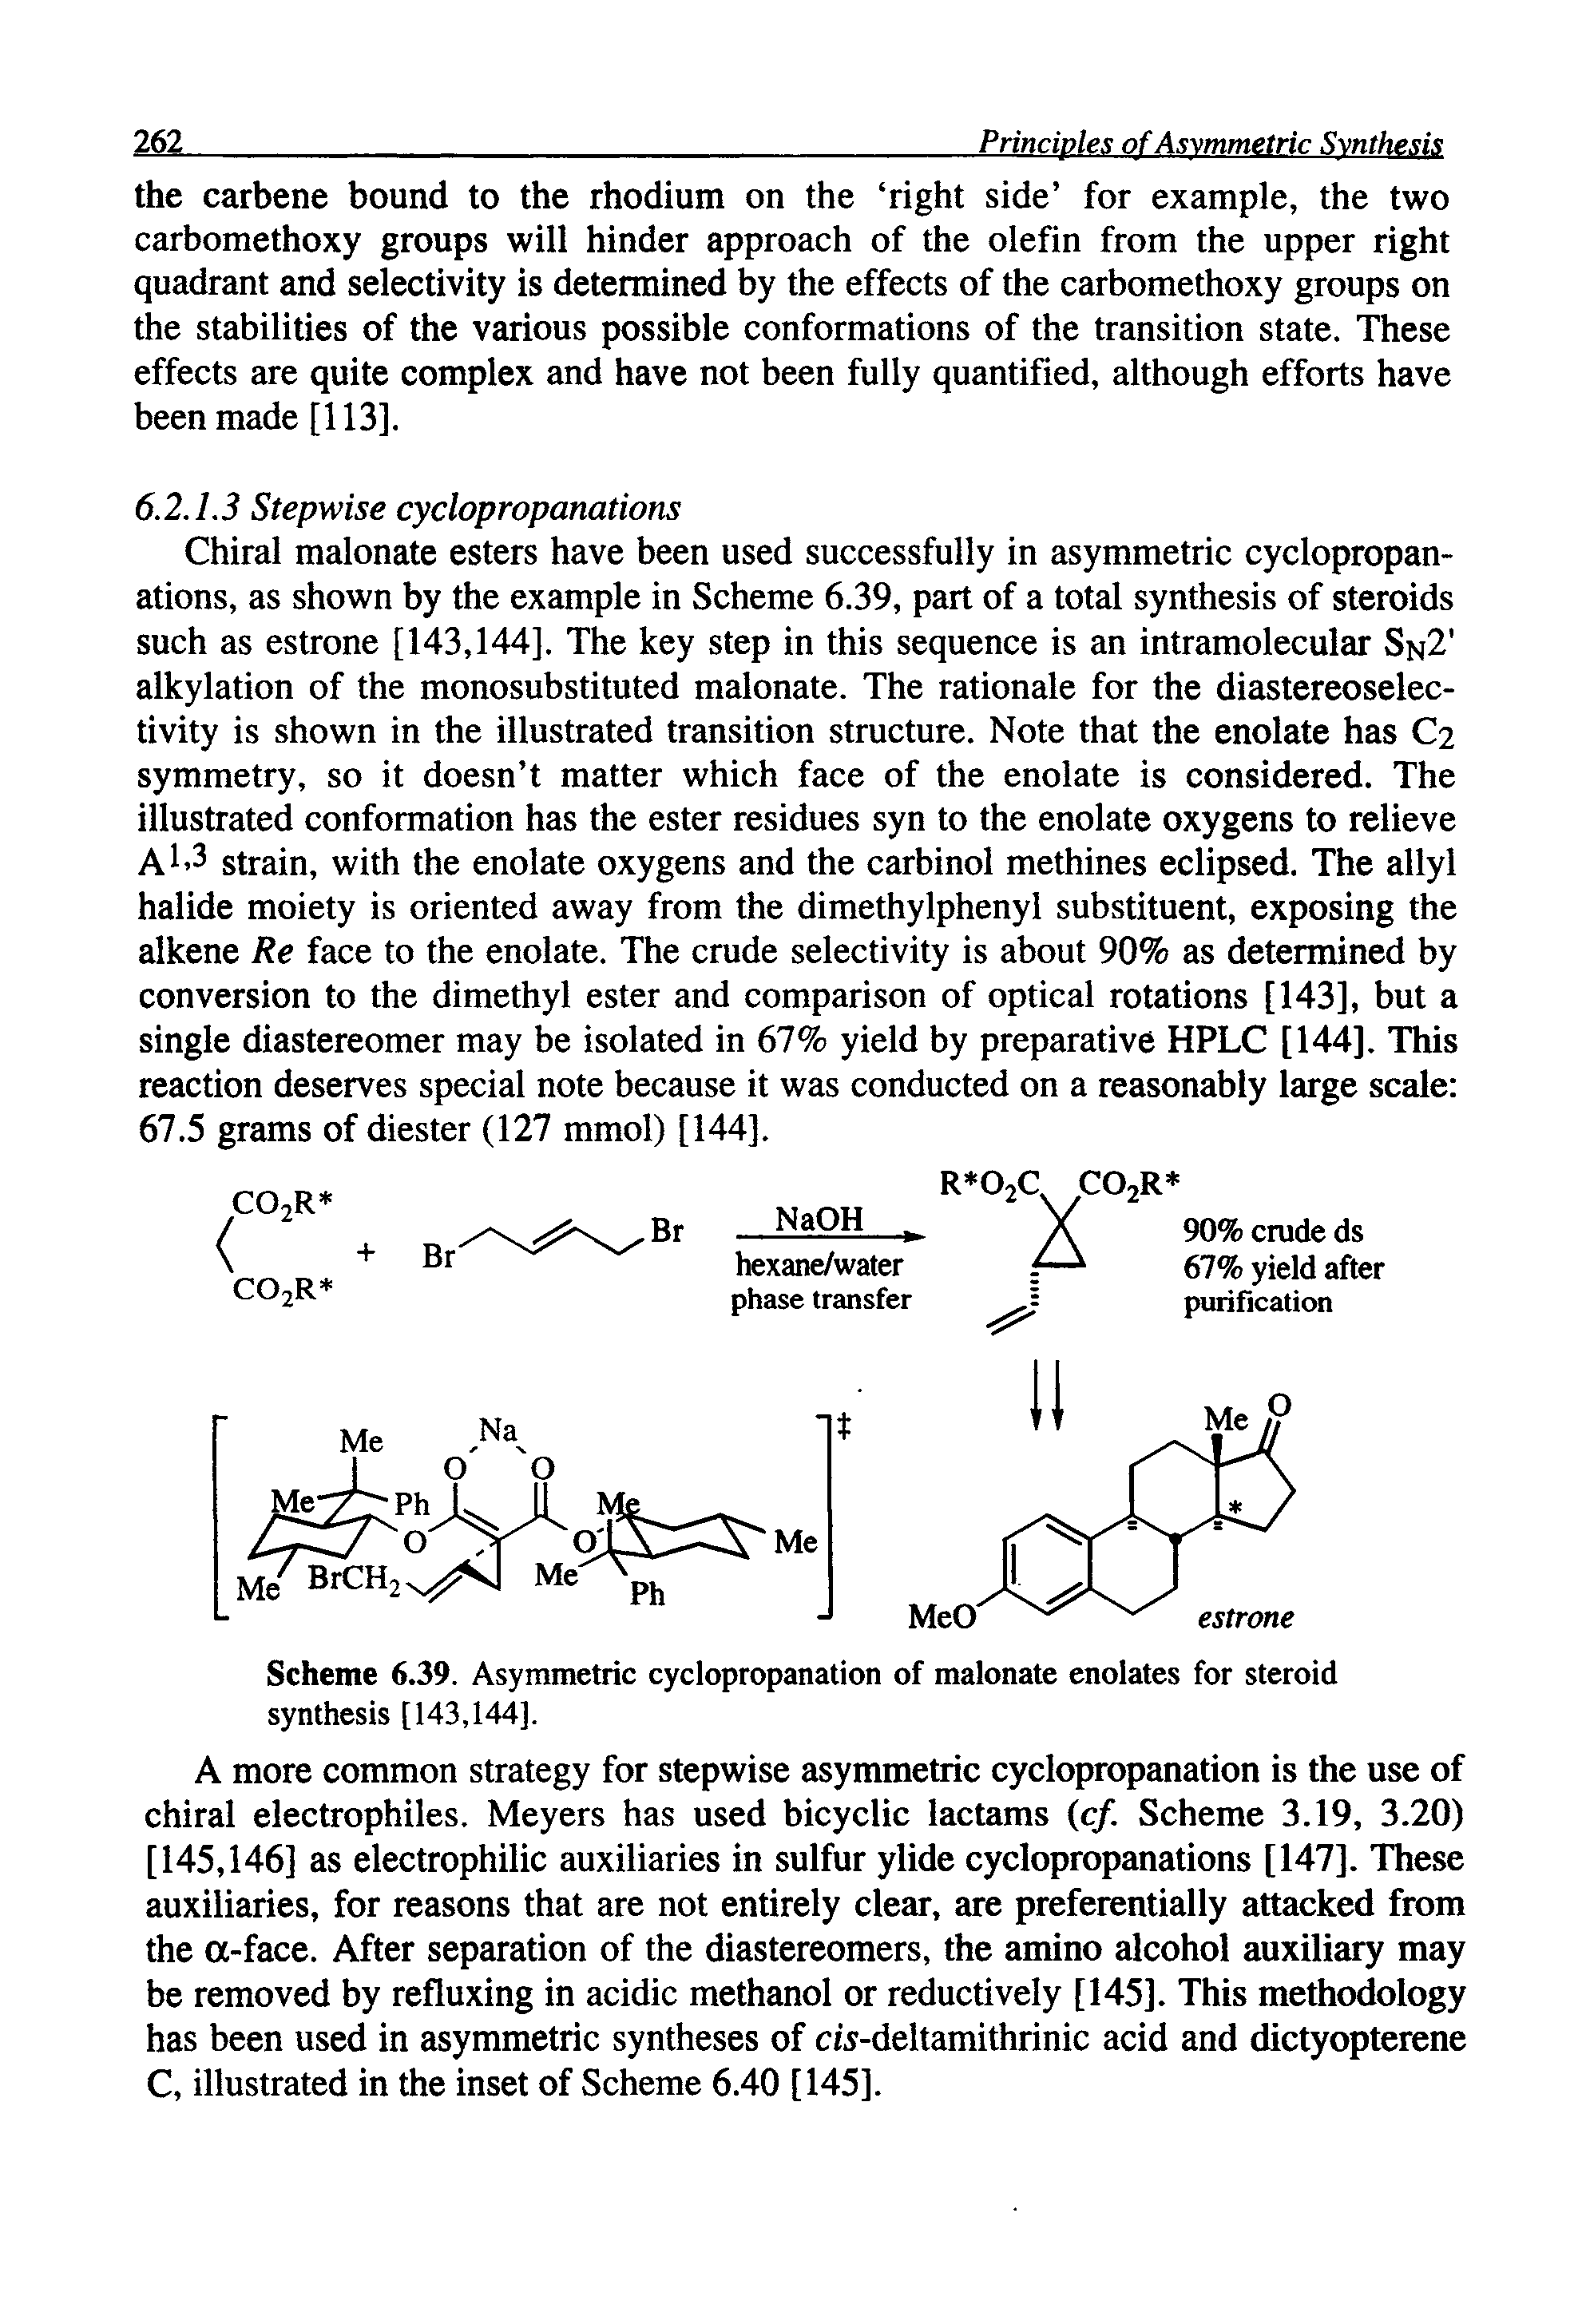 Scheme 6.39. Asymmetric cyclopropanation of malonate enolates for steroid synthesis [143,144].